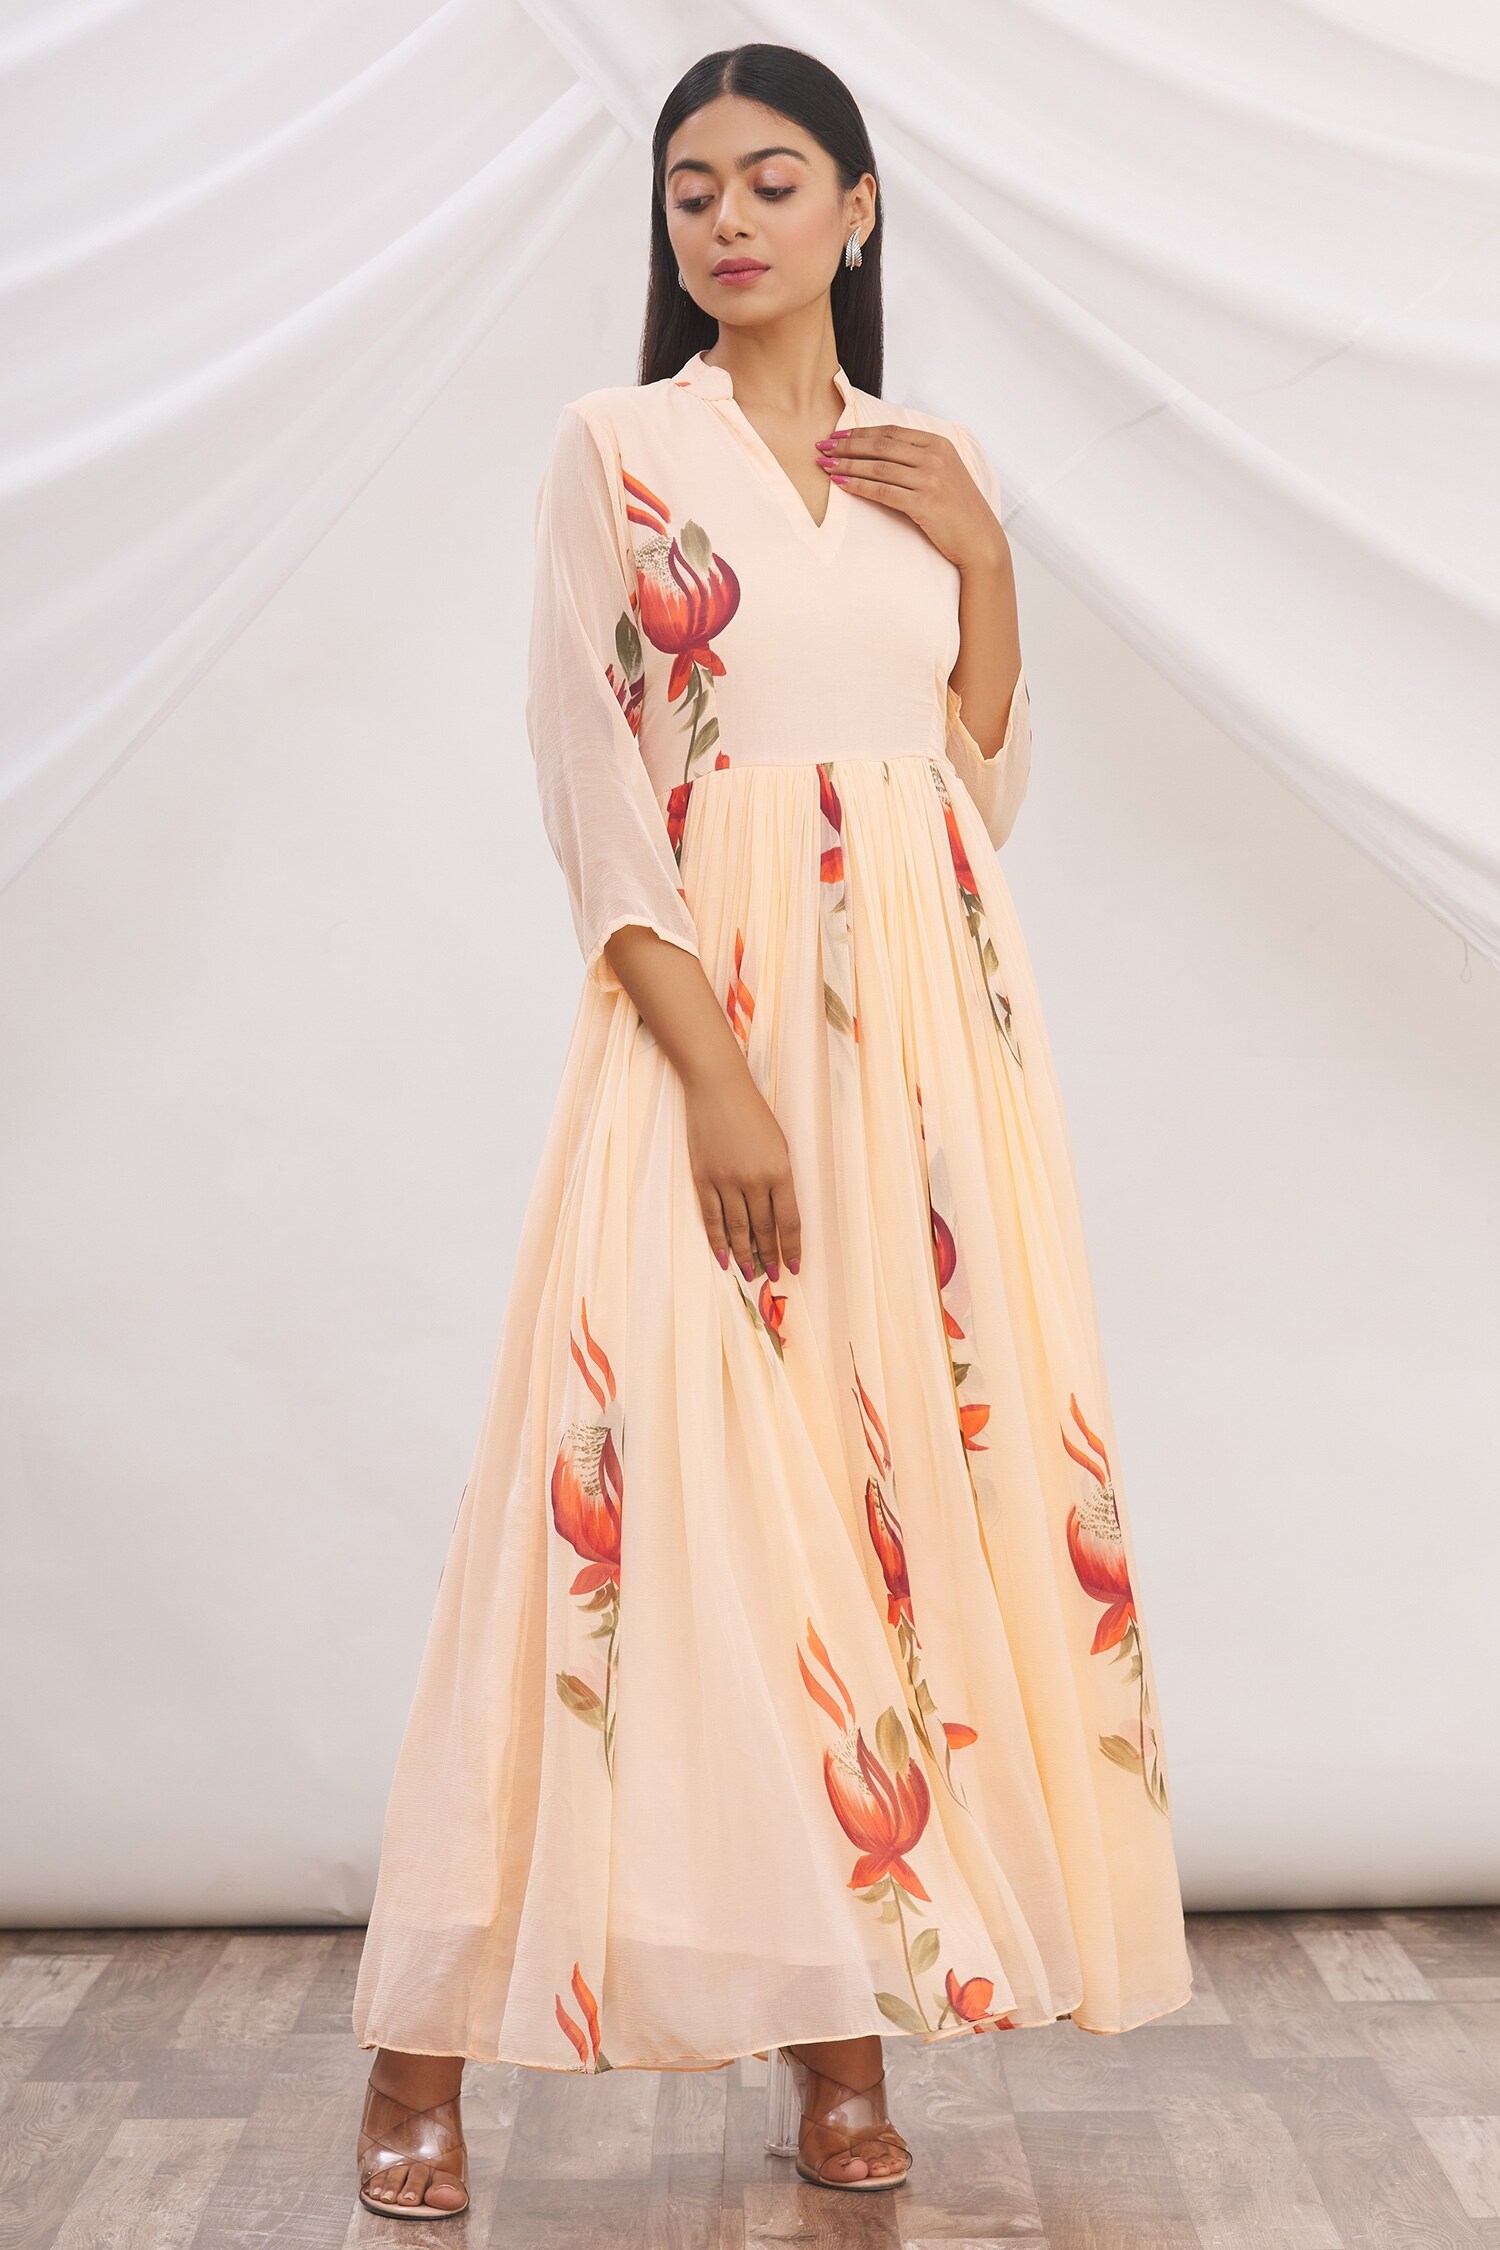 Samyukta Singhania Peach Chiffon Floral Hand Painted Dress